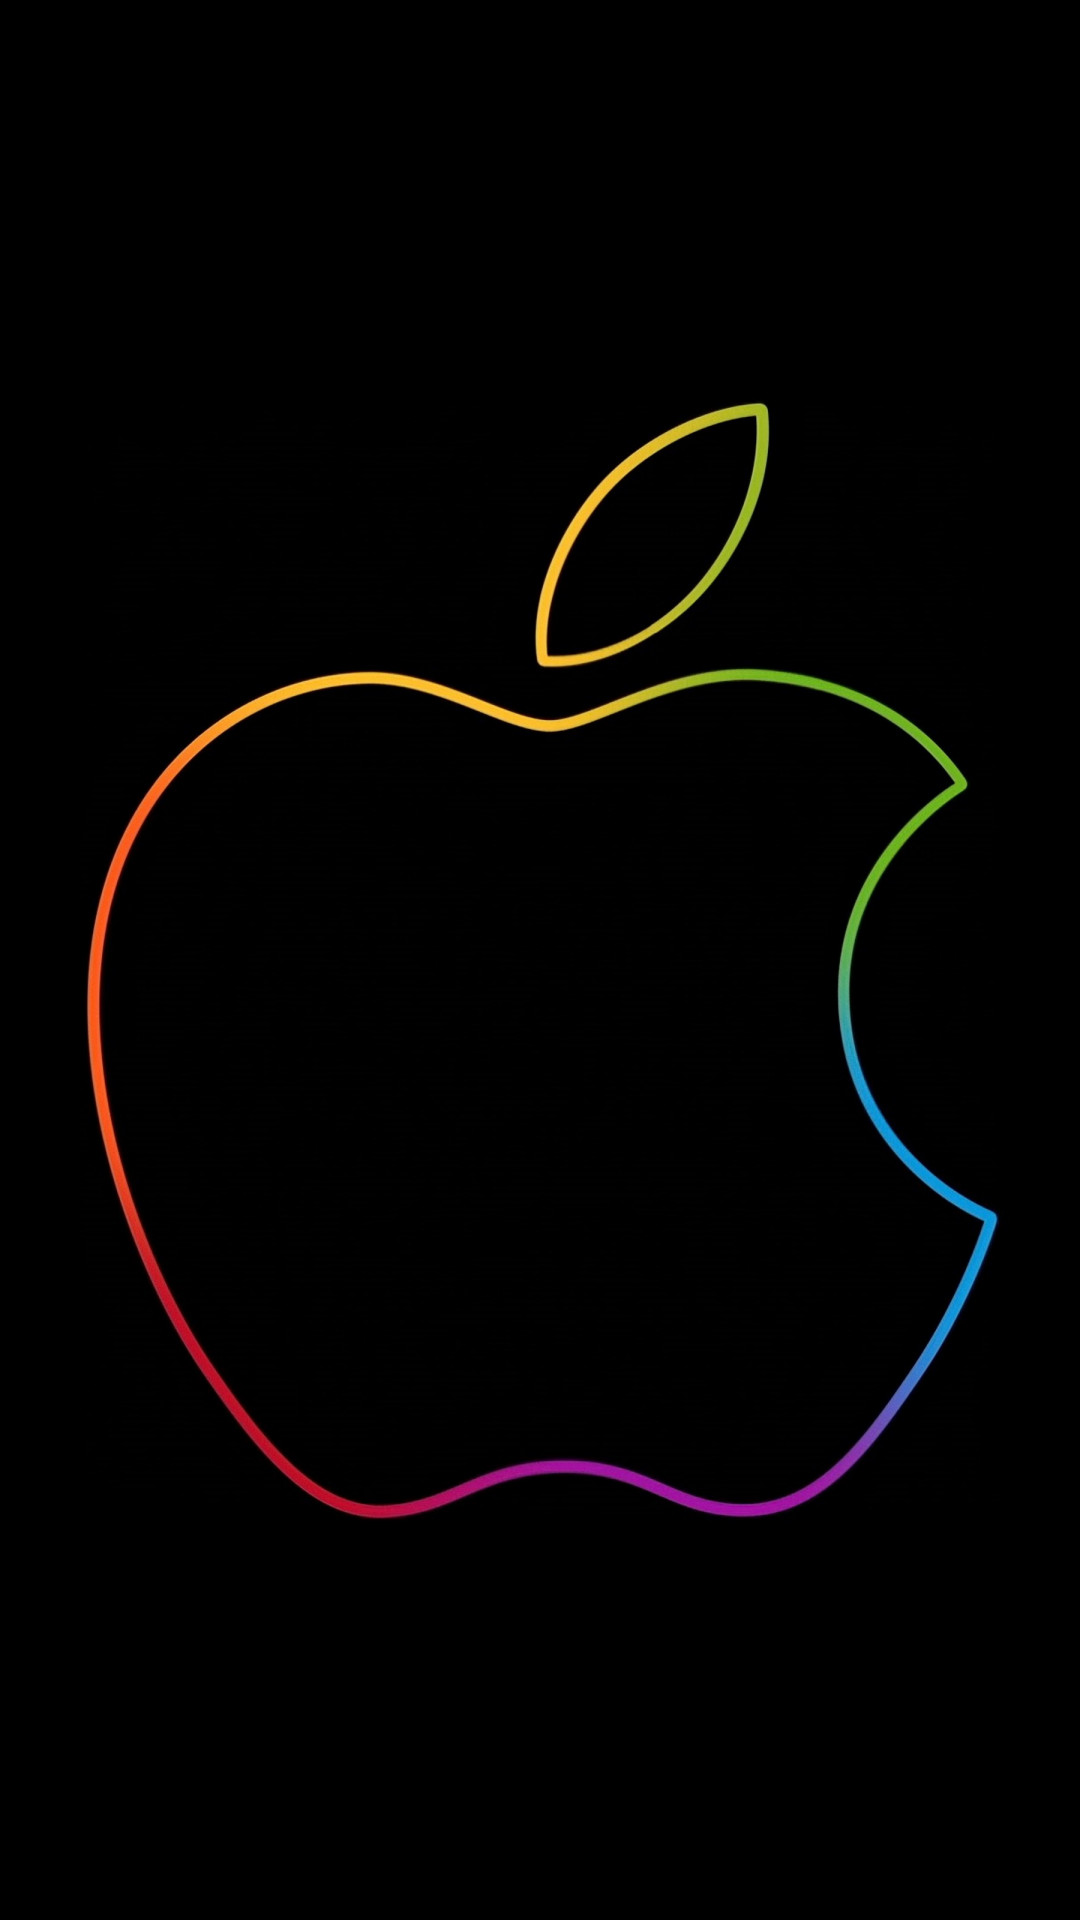 The famous Apple logo wallpaper 1080x1920